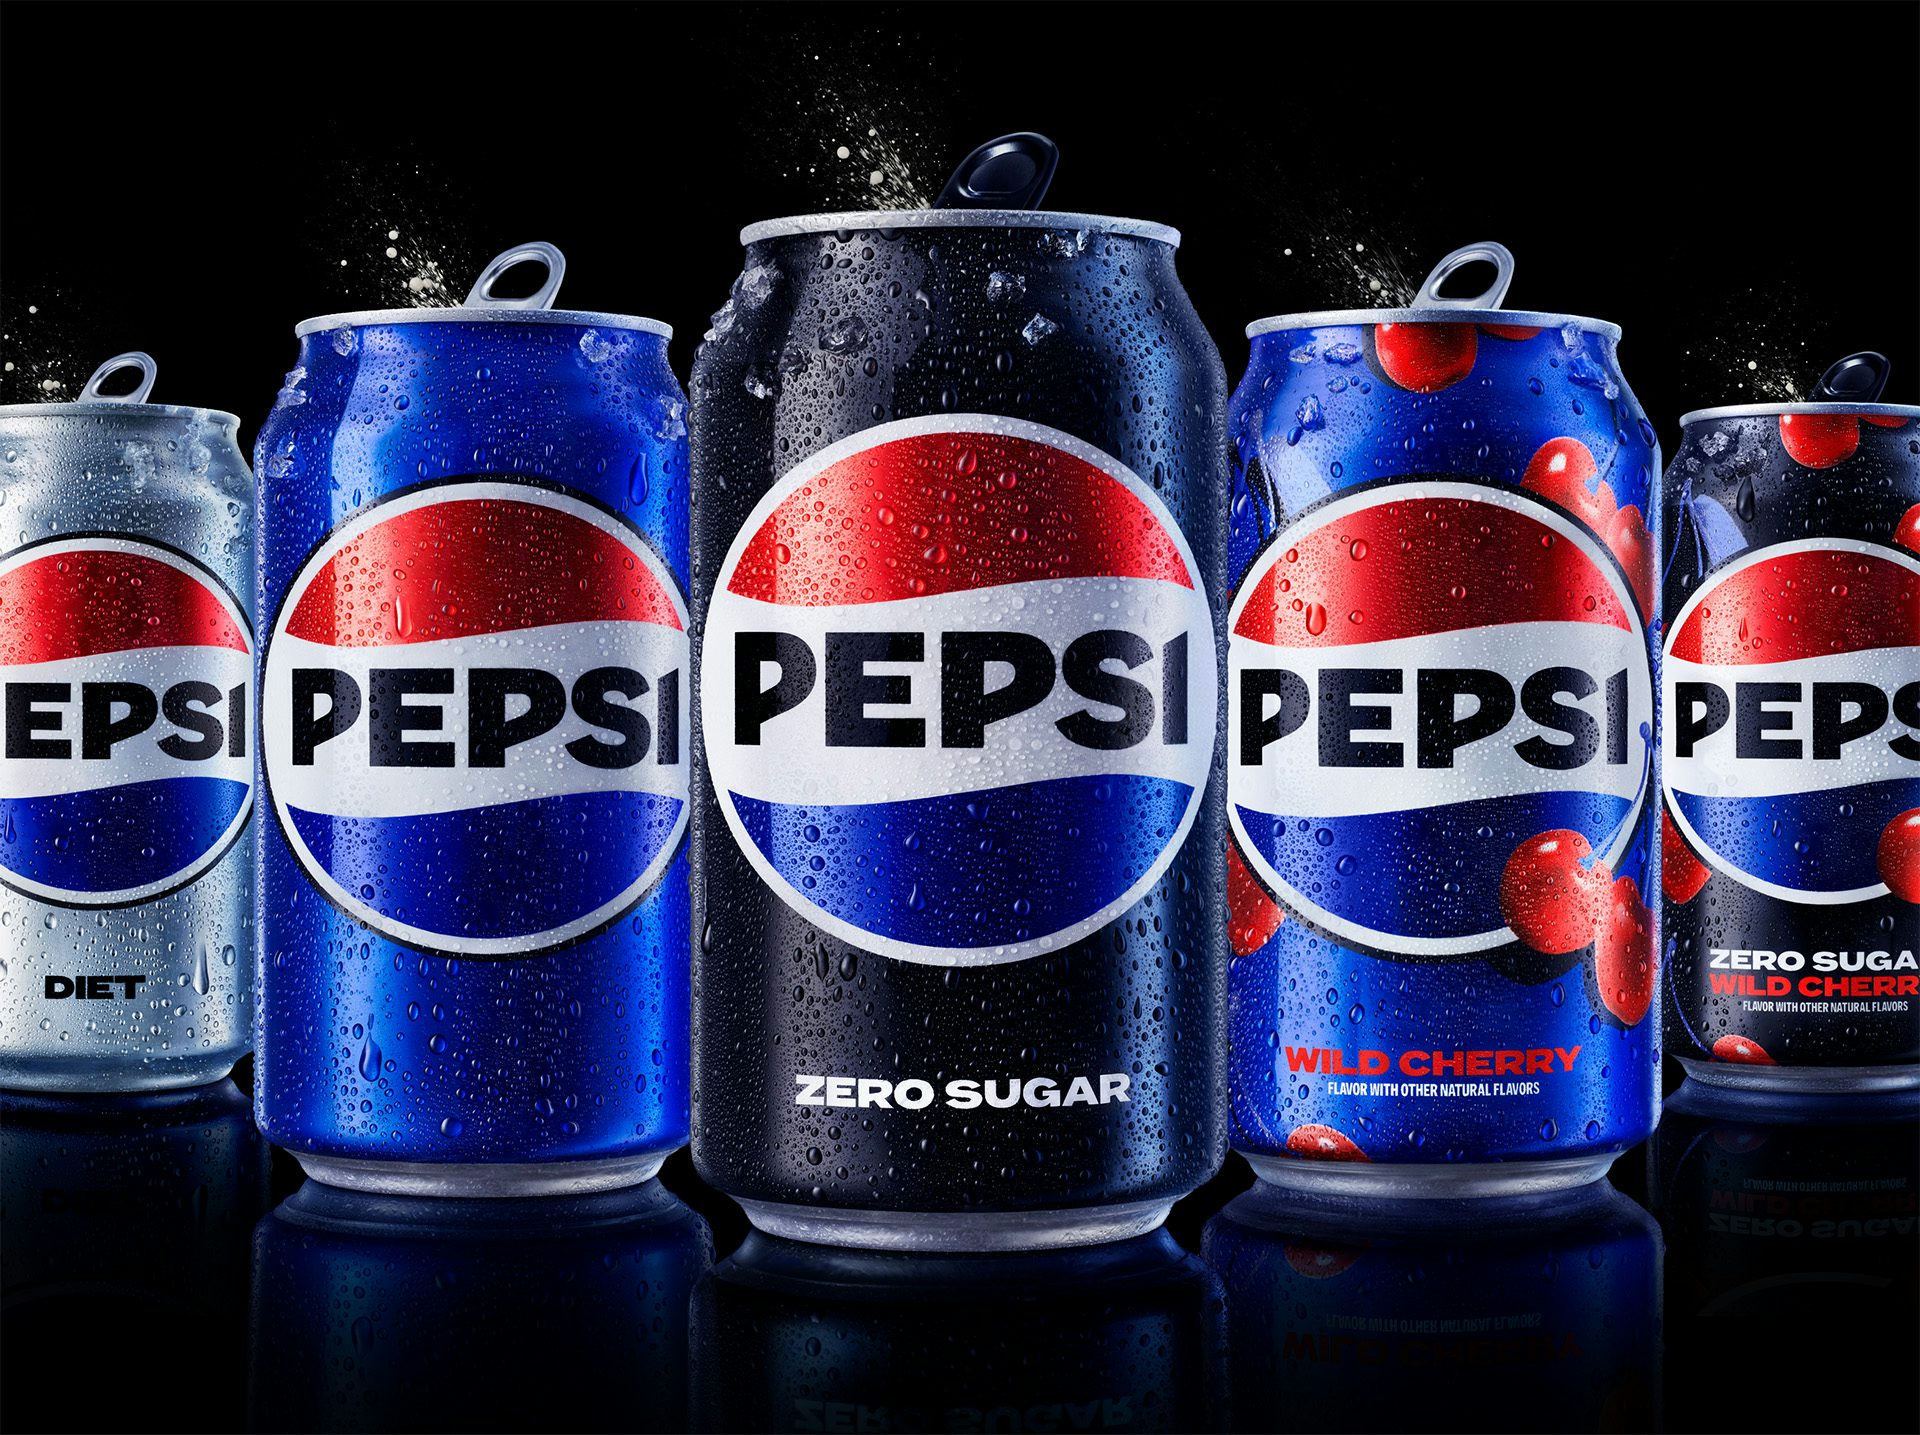 Pepsi reveals new branding that nods to its past